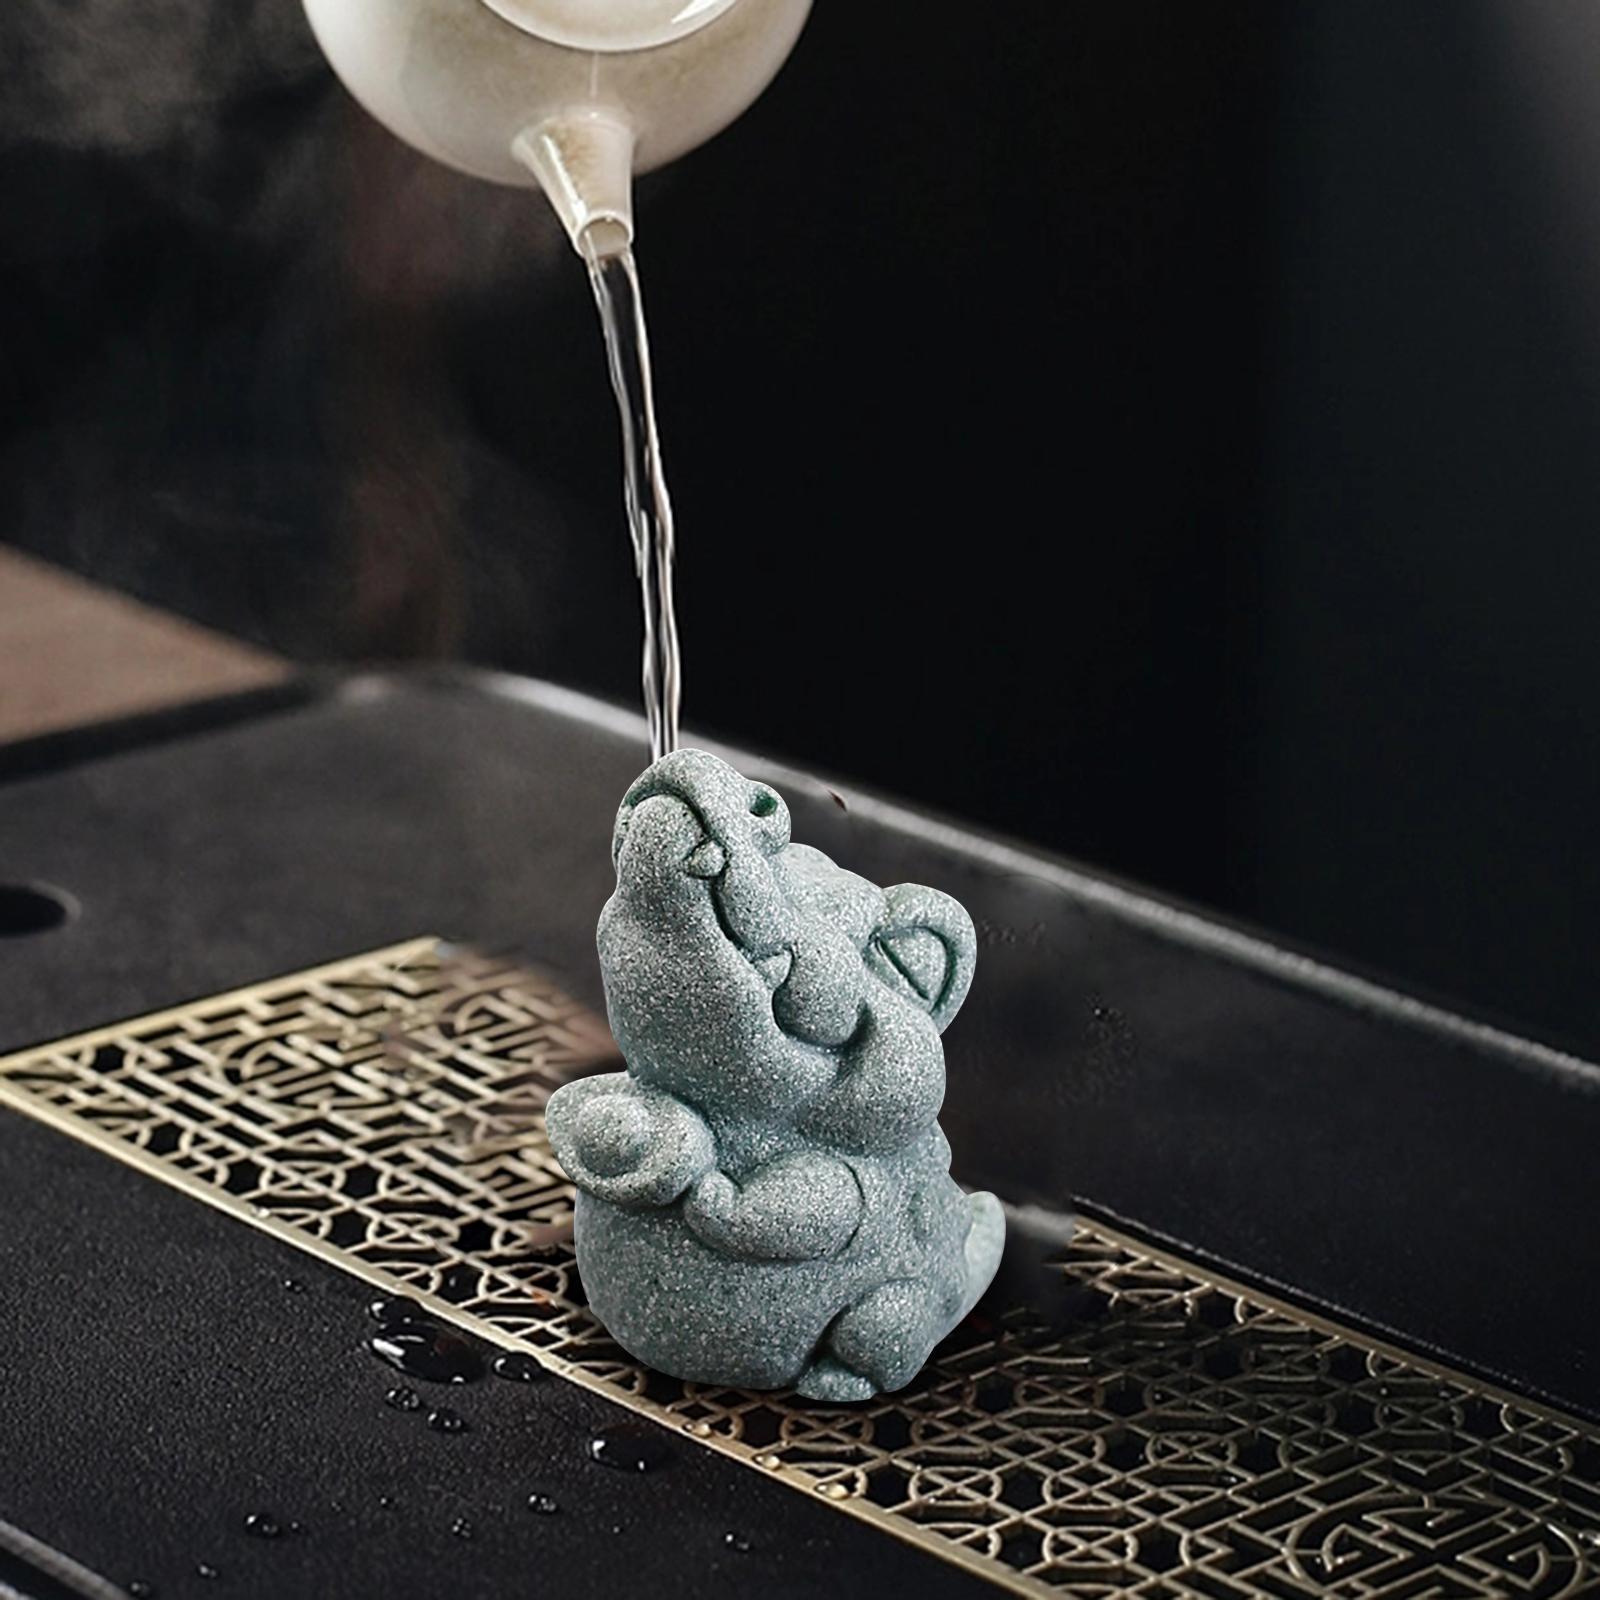 Tea Pet Decorative Cute Artwork Animal Statue for Tea Table Living Room Home Crocodile